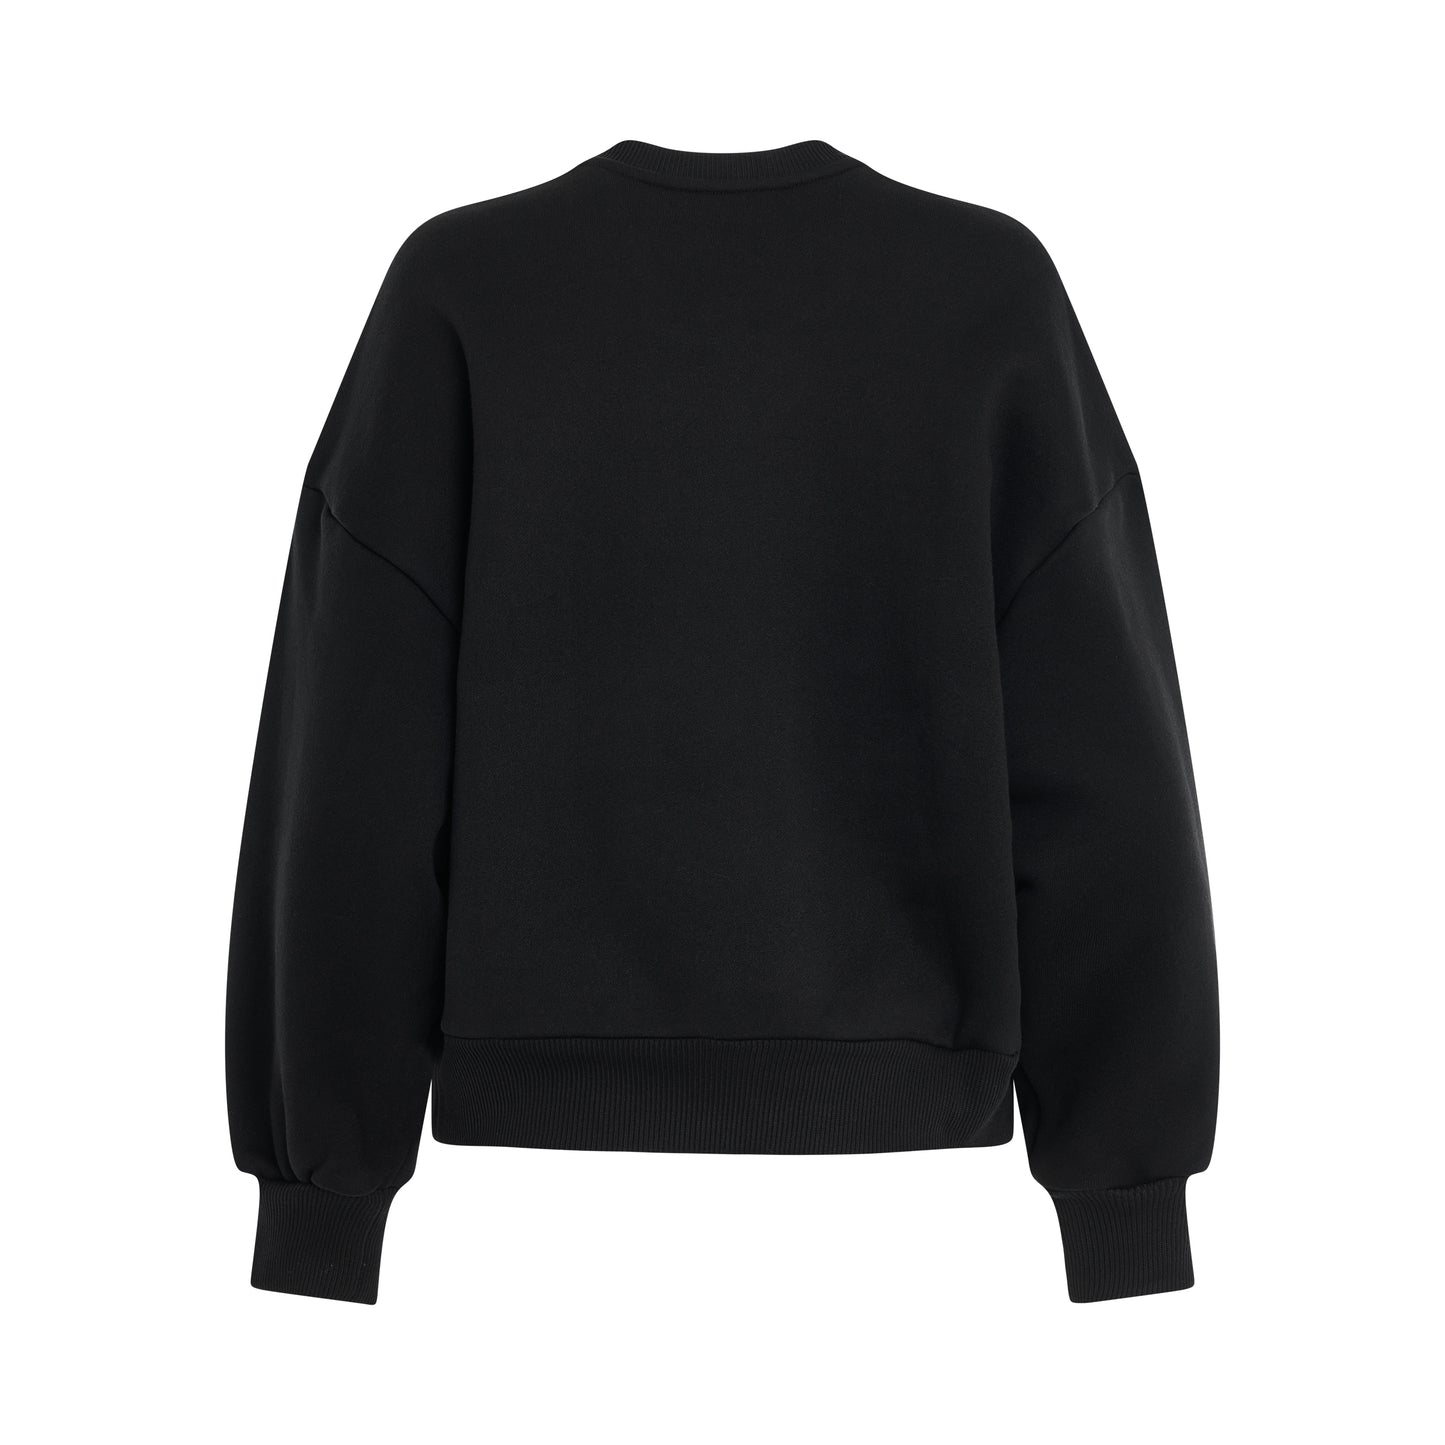 Warped Print Sweatshirt in Black